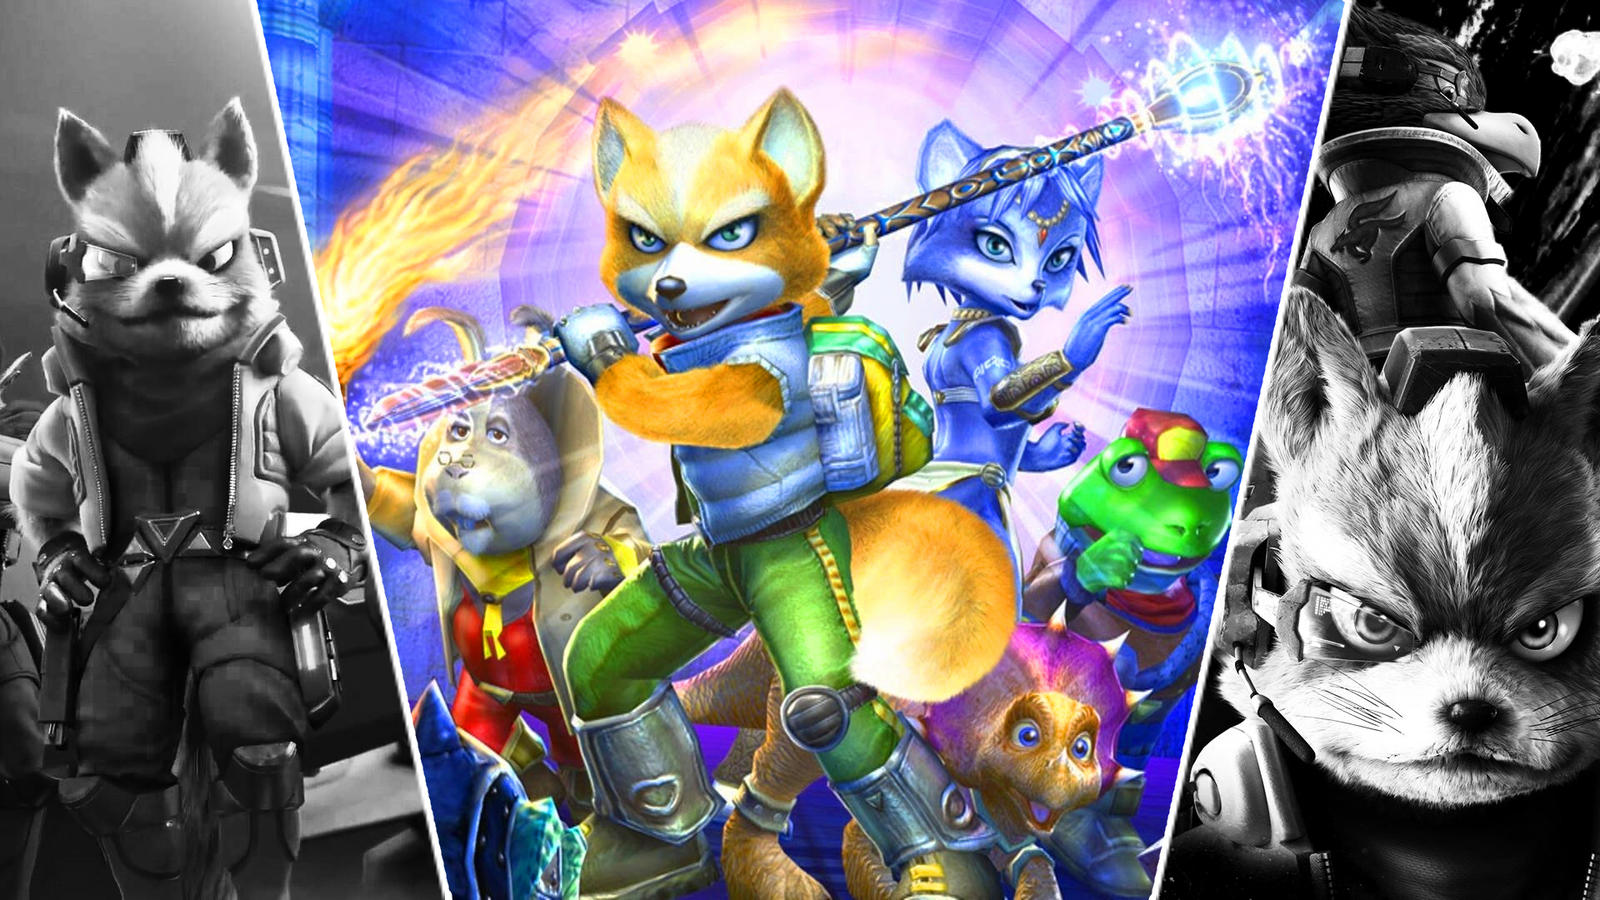 Star Fox Adventures - Nintendo GameCube